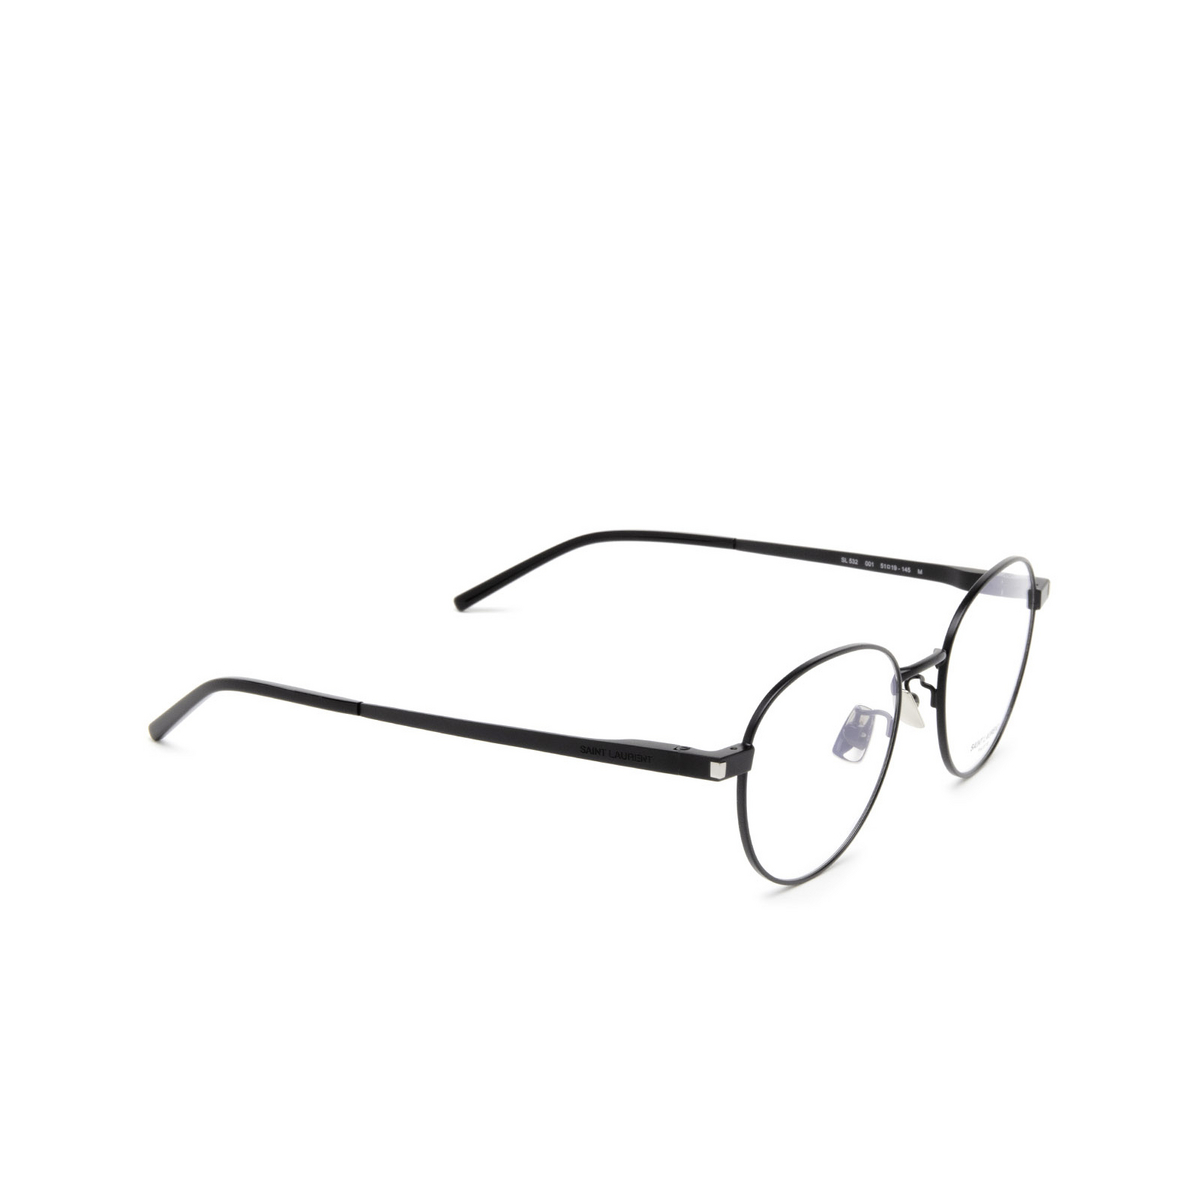 Saint Laurent® Round Eyeglasses: SL 532 color Black 001 - three-quarters view.